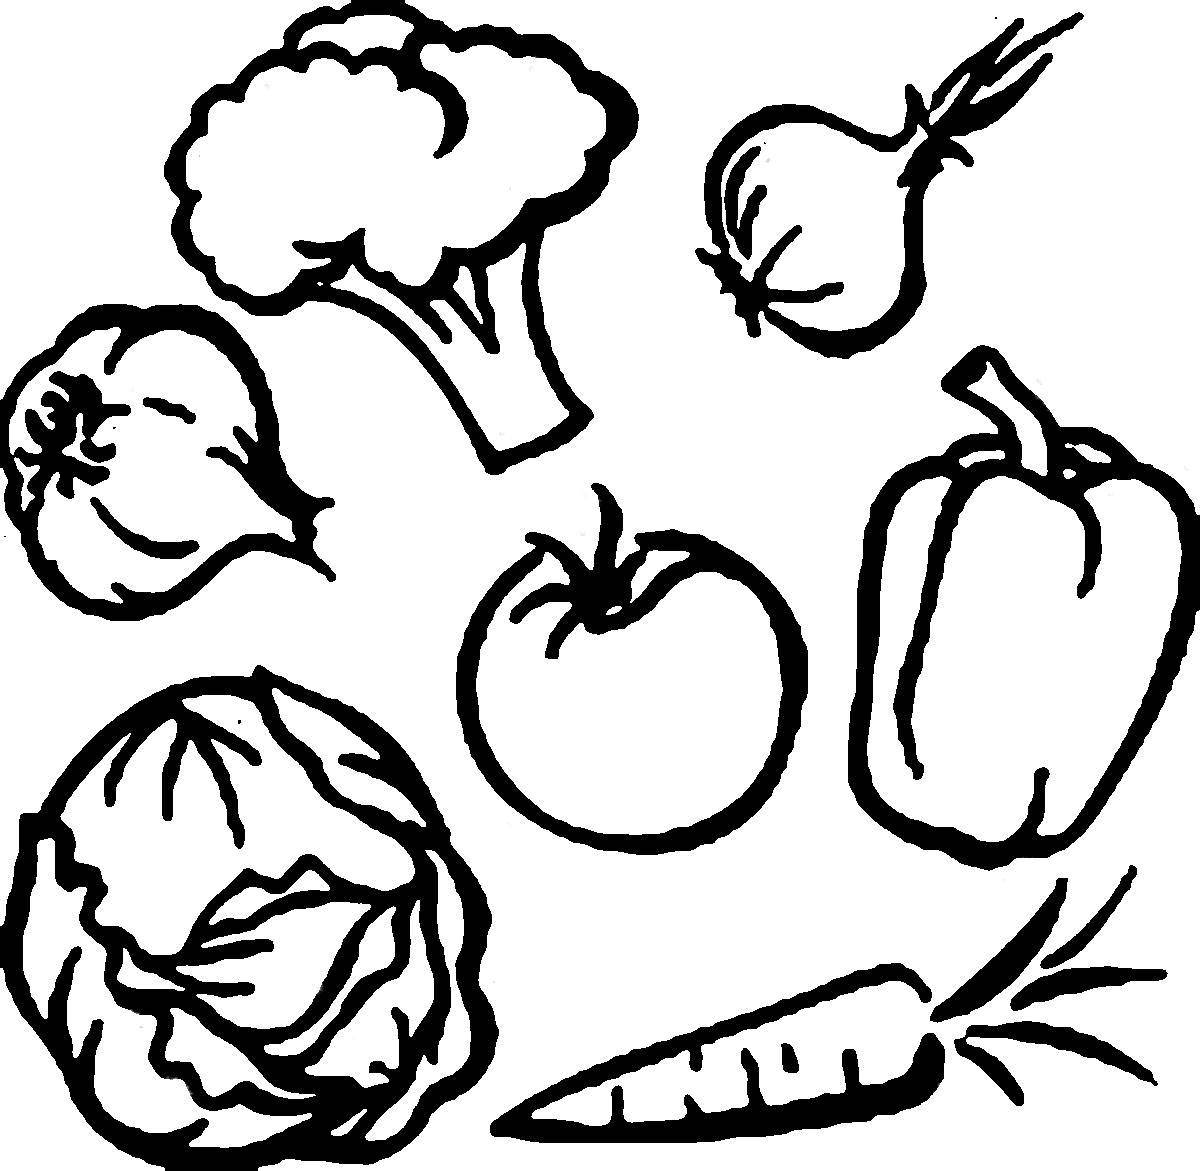 Coloring Vegetables. Category vegetables. Tags:  vegetables.